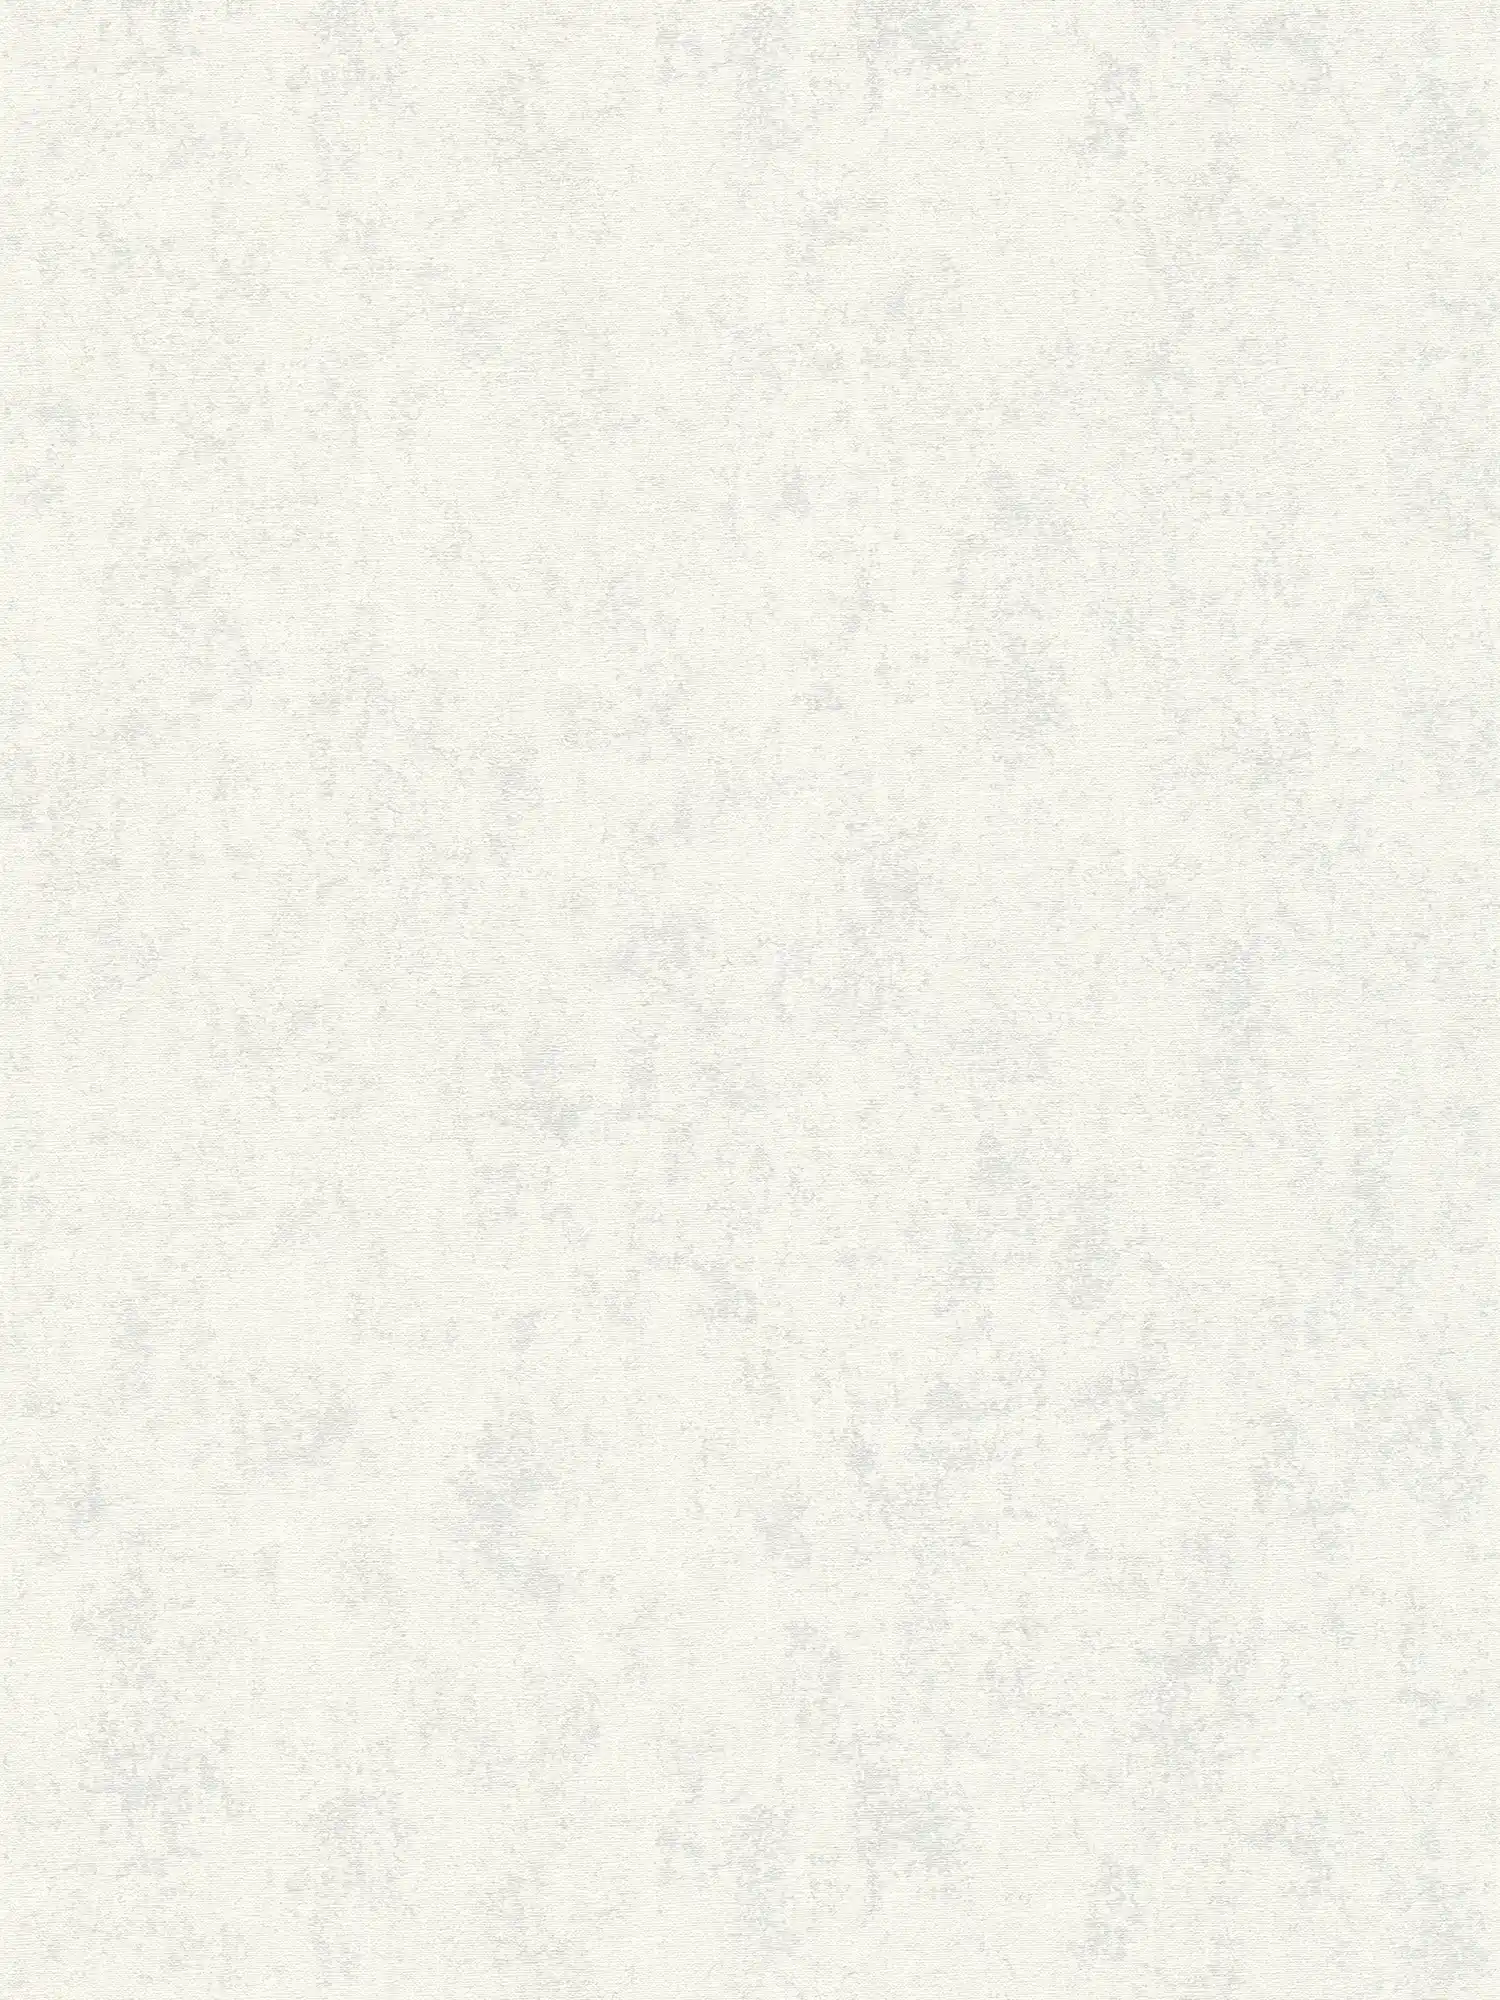 Carta da parati a tinta unita in stile Scandi - grigio, bianco
